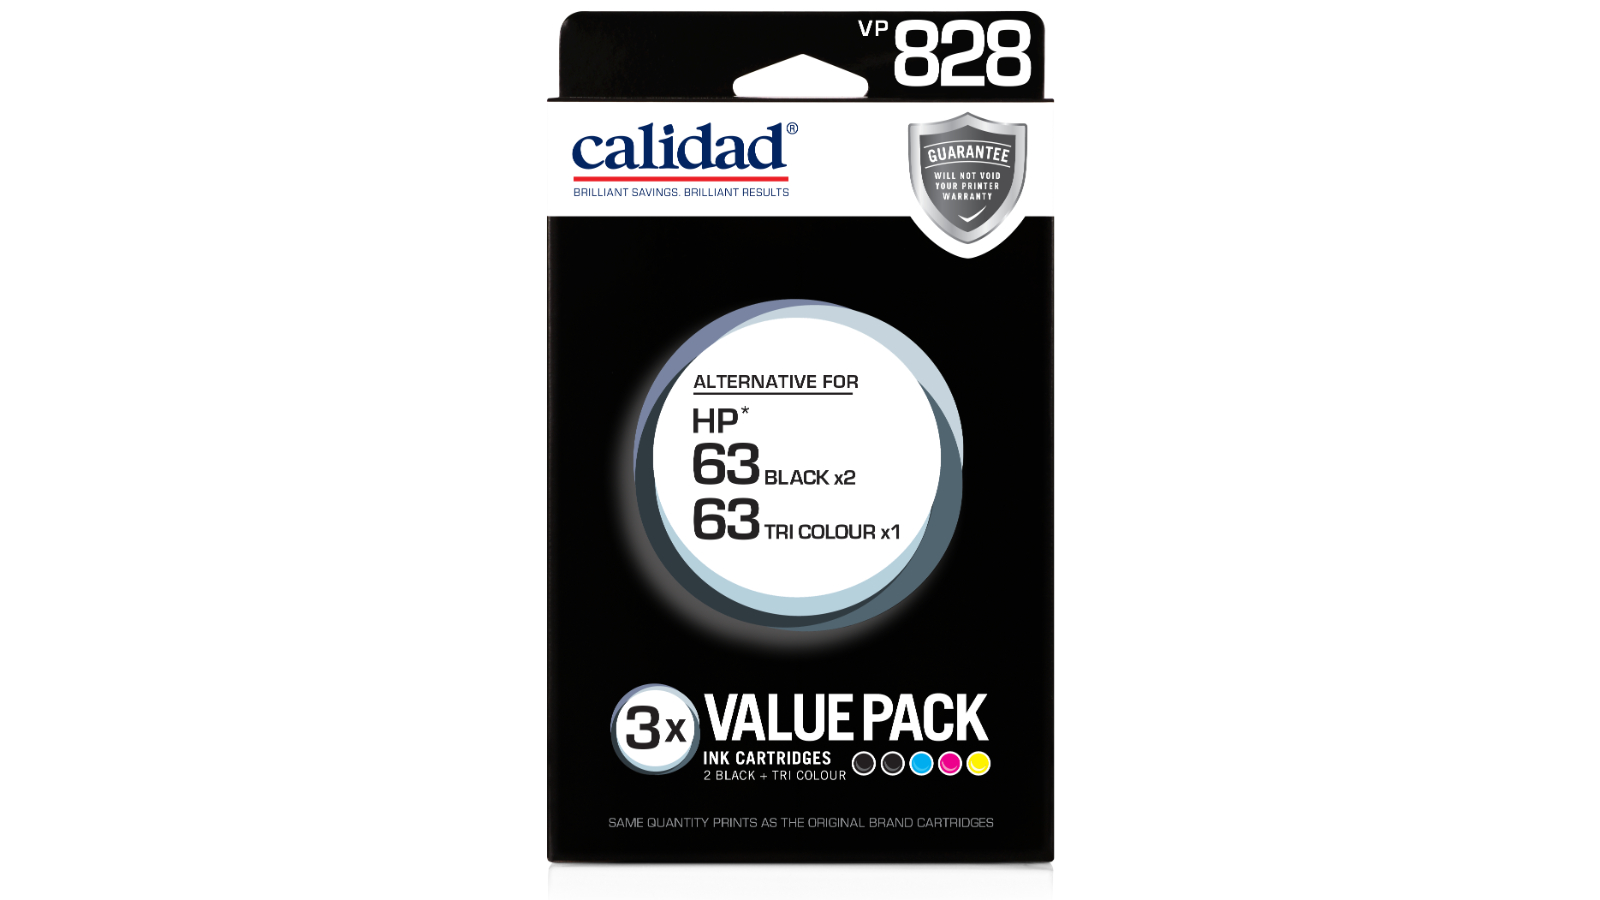 Calidad Epson 604 XL Ink Cartridge 4 Value Pack